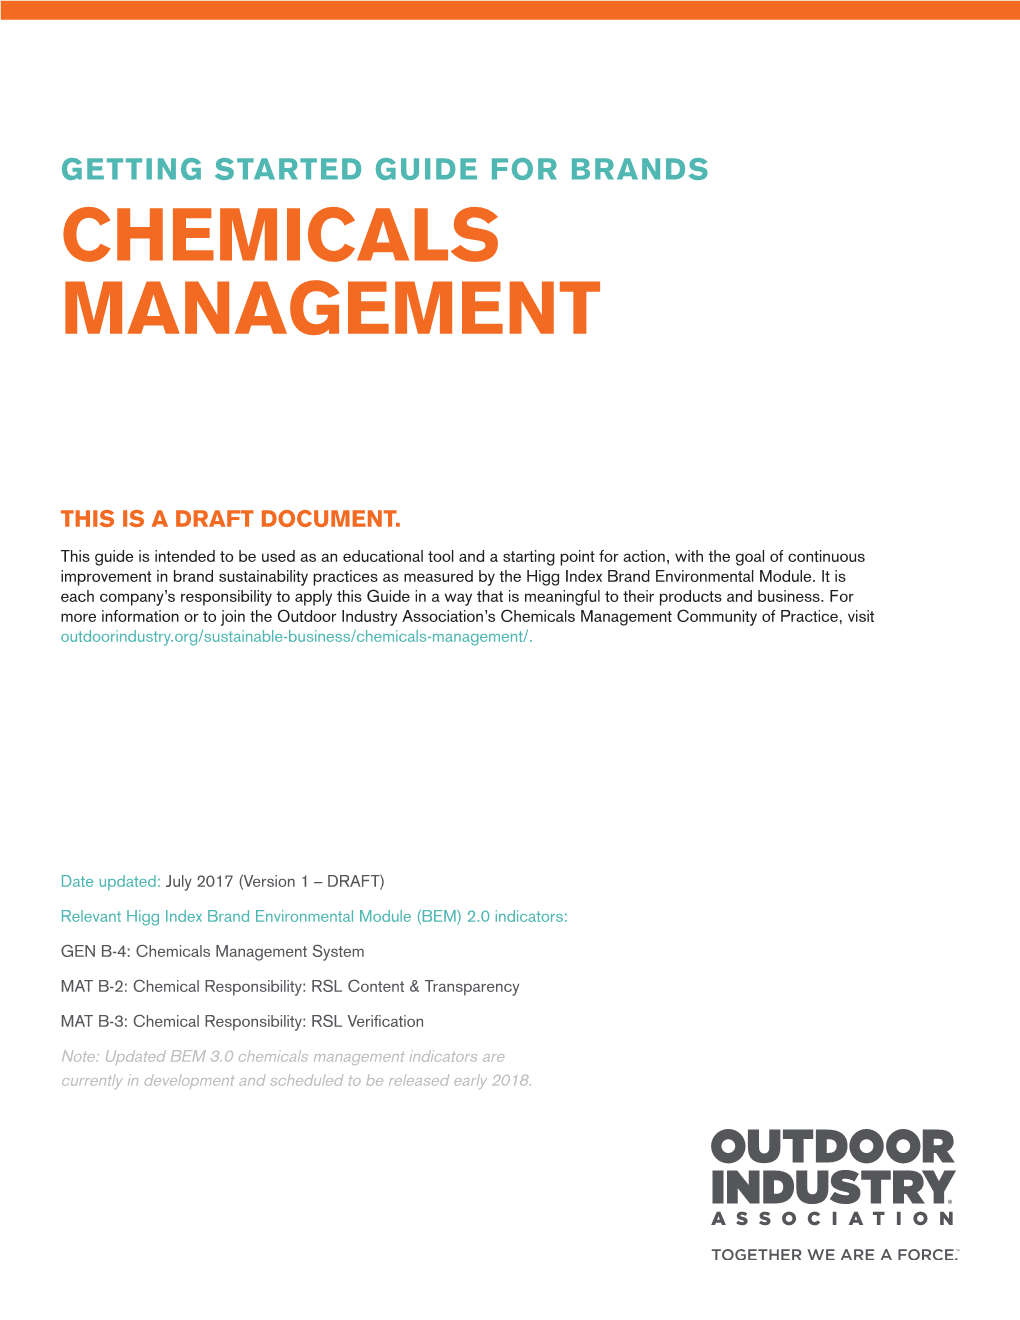 Chemicals Management